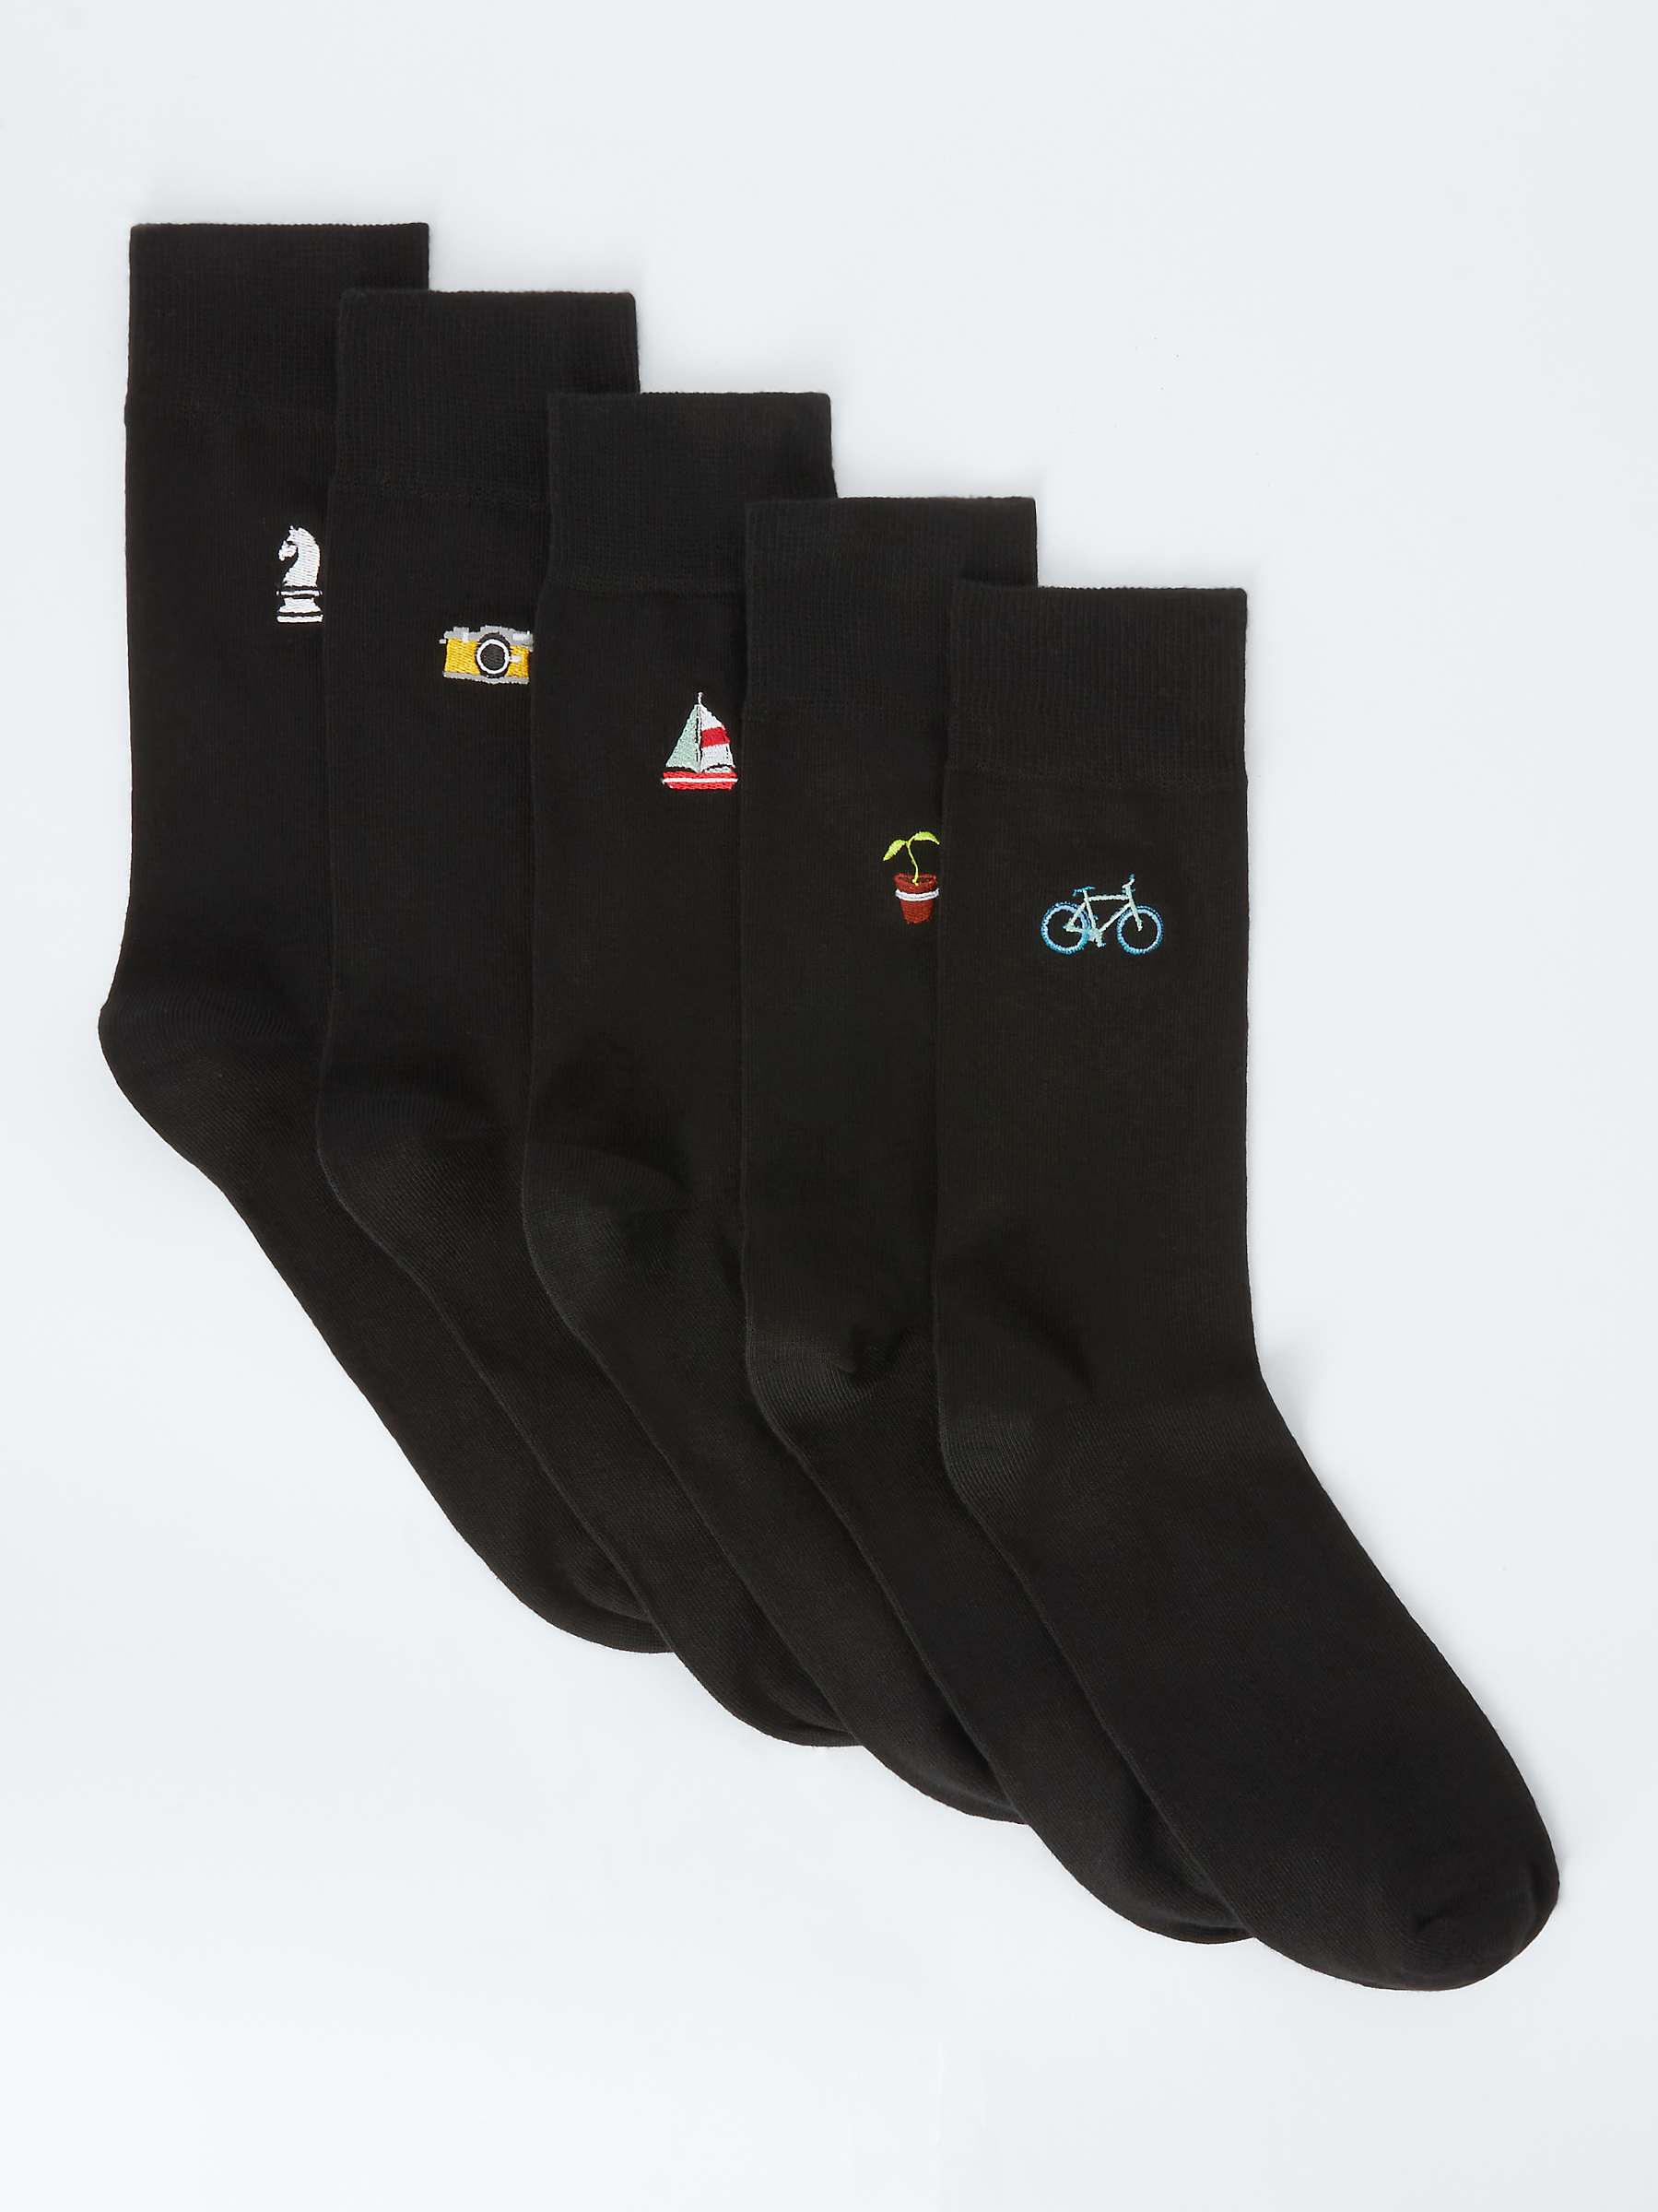 Buy John Lewis Embroidered Hobbies Socks, Pack of 5, Black/Multi Online at johnlewis.com